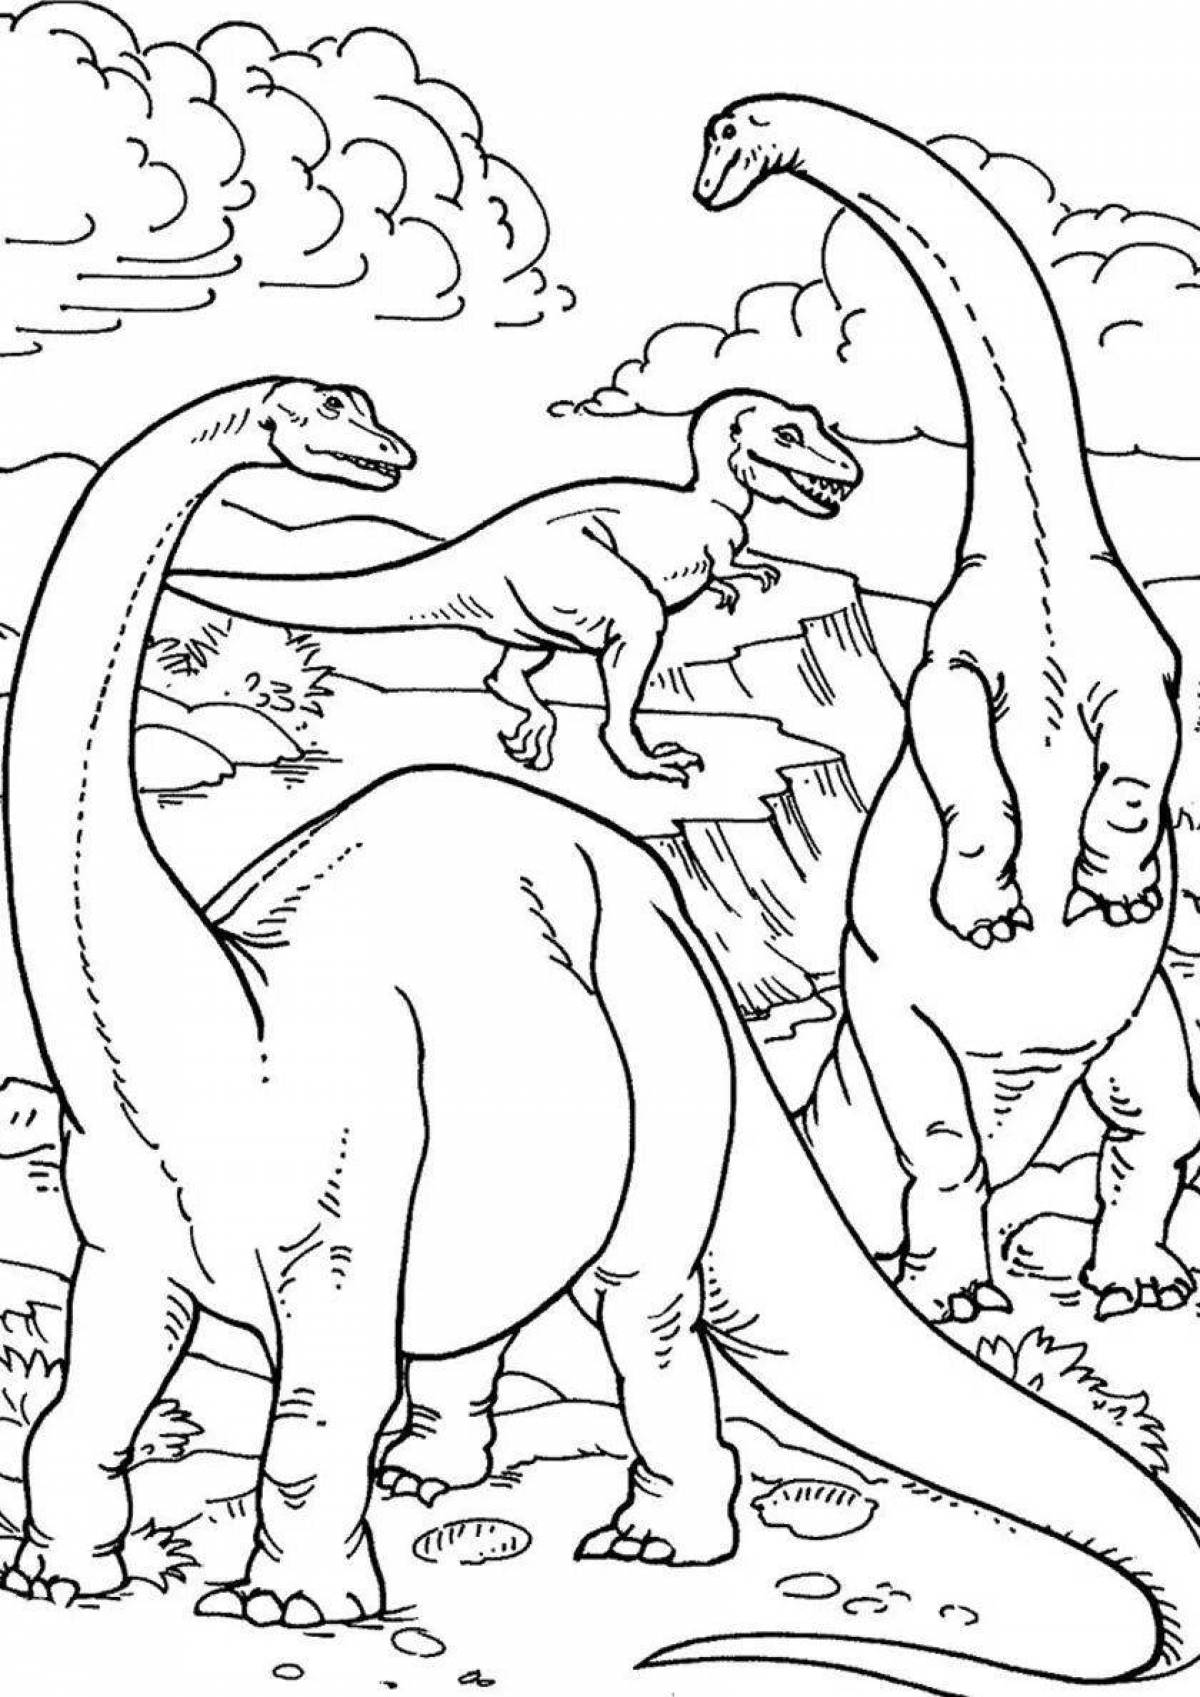 Coloring page joyful dinosaur